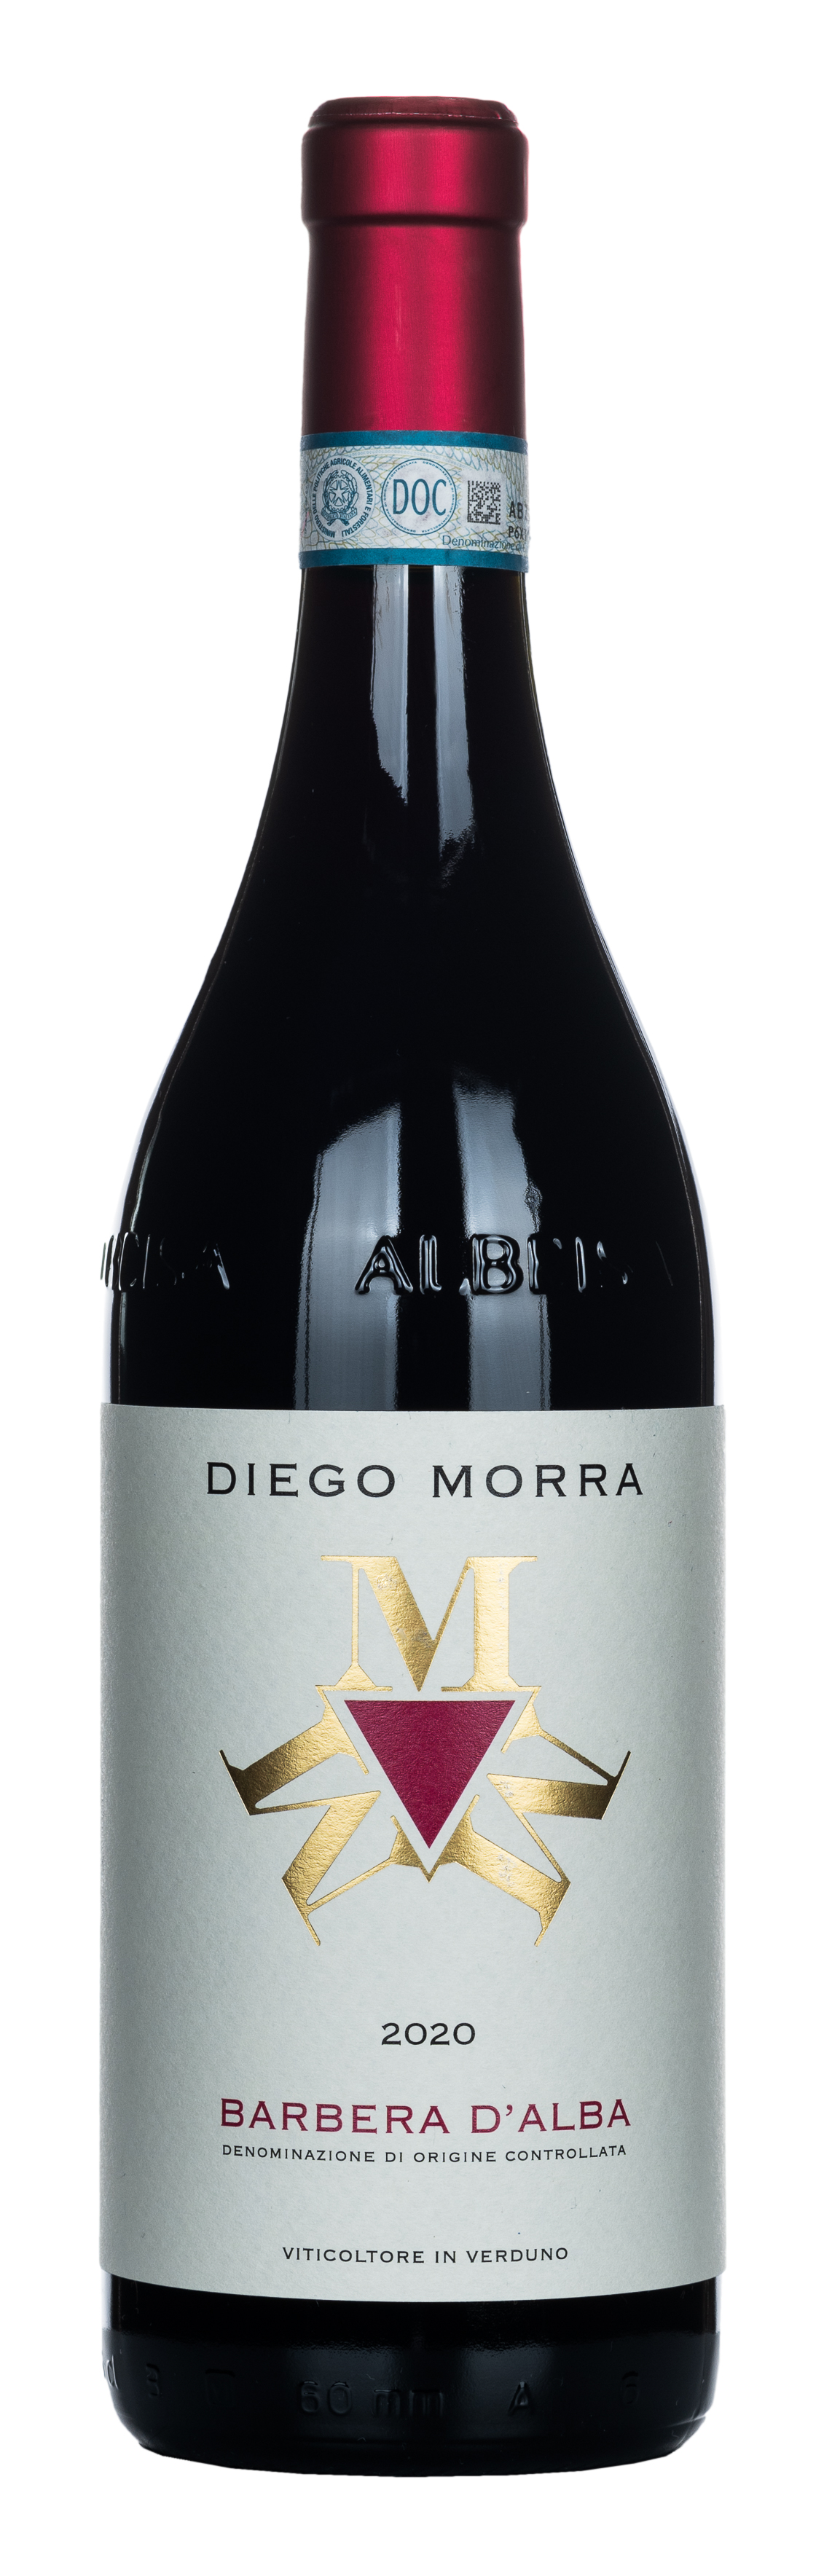 Wine Diego Morra Barbera d'Alba